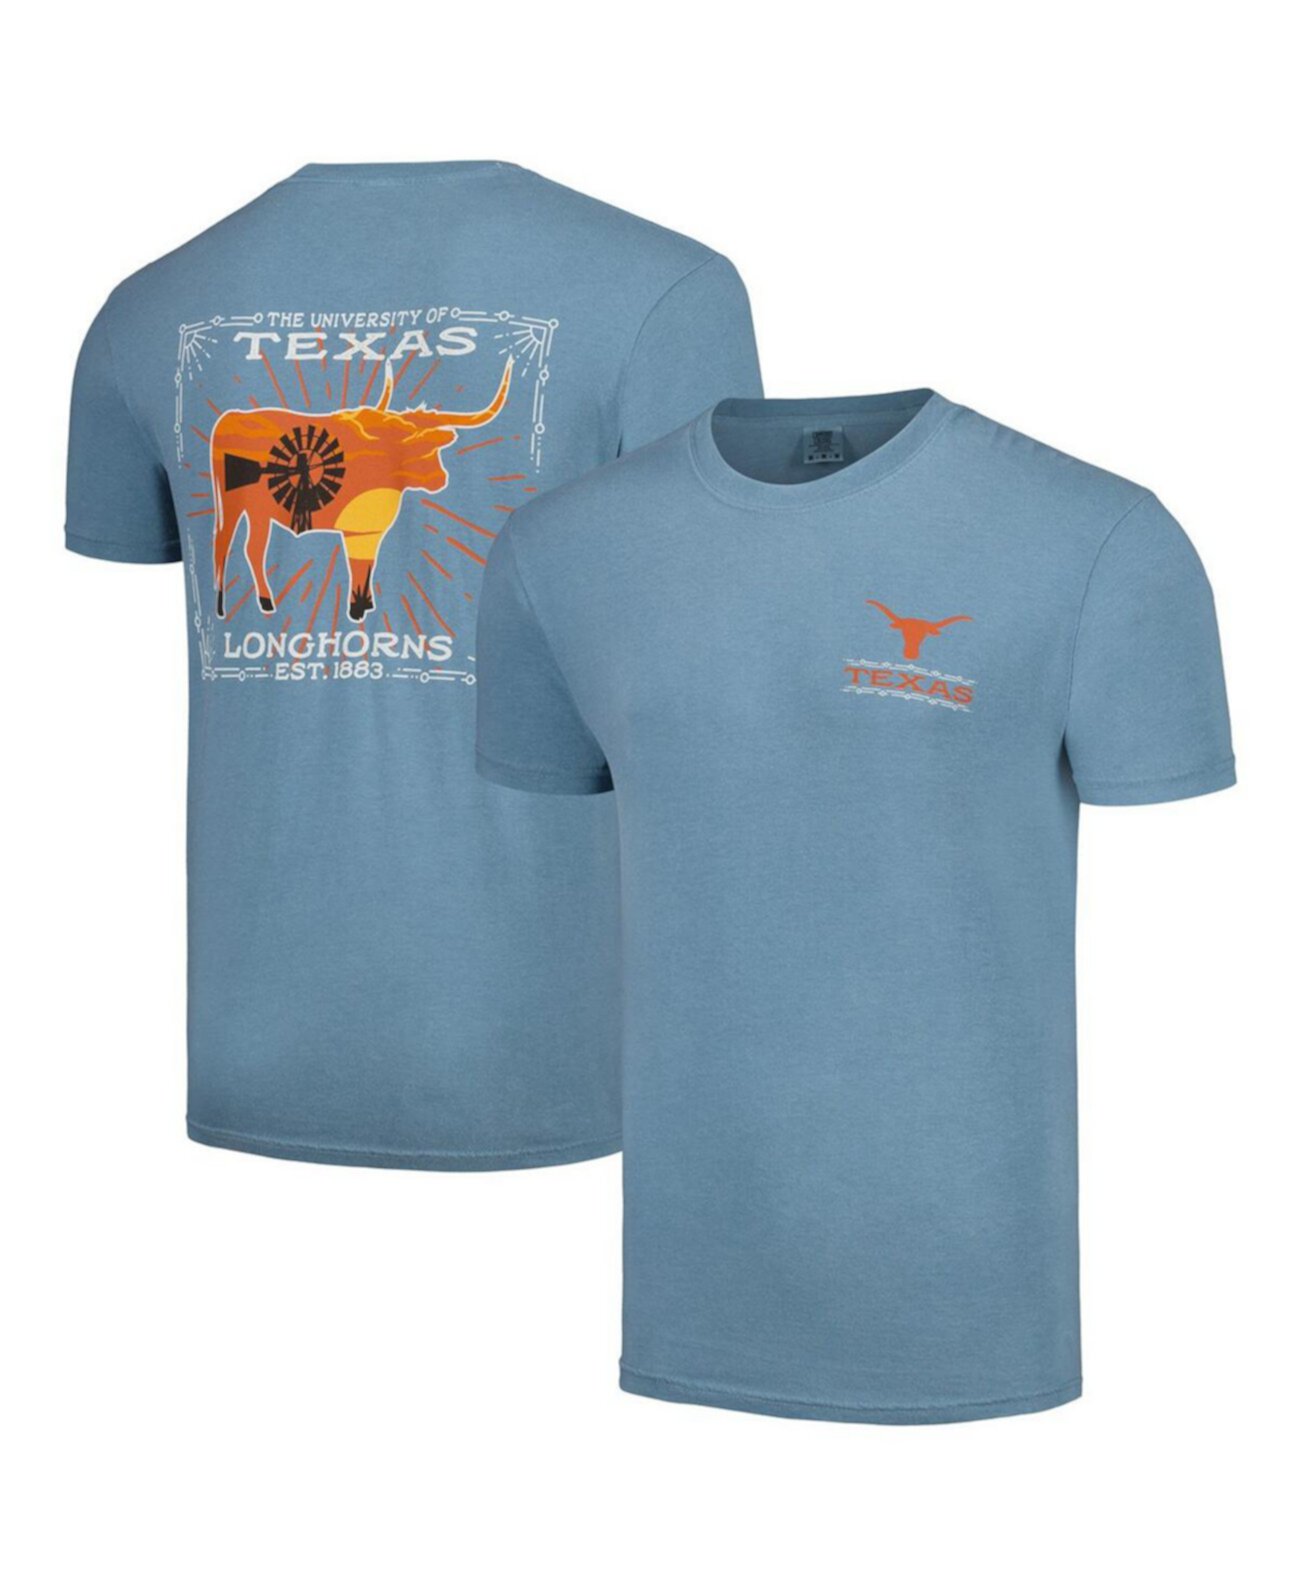 Мужская голубая футболка с пейзажем штата Texas Longhorns Image One